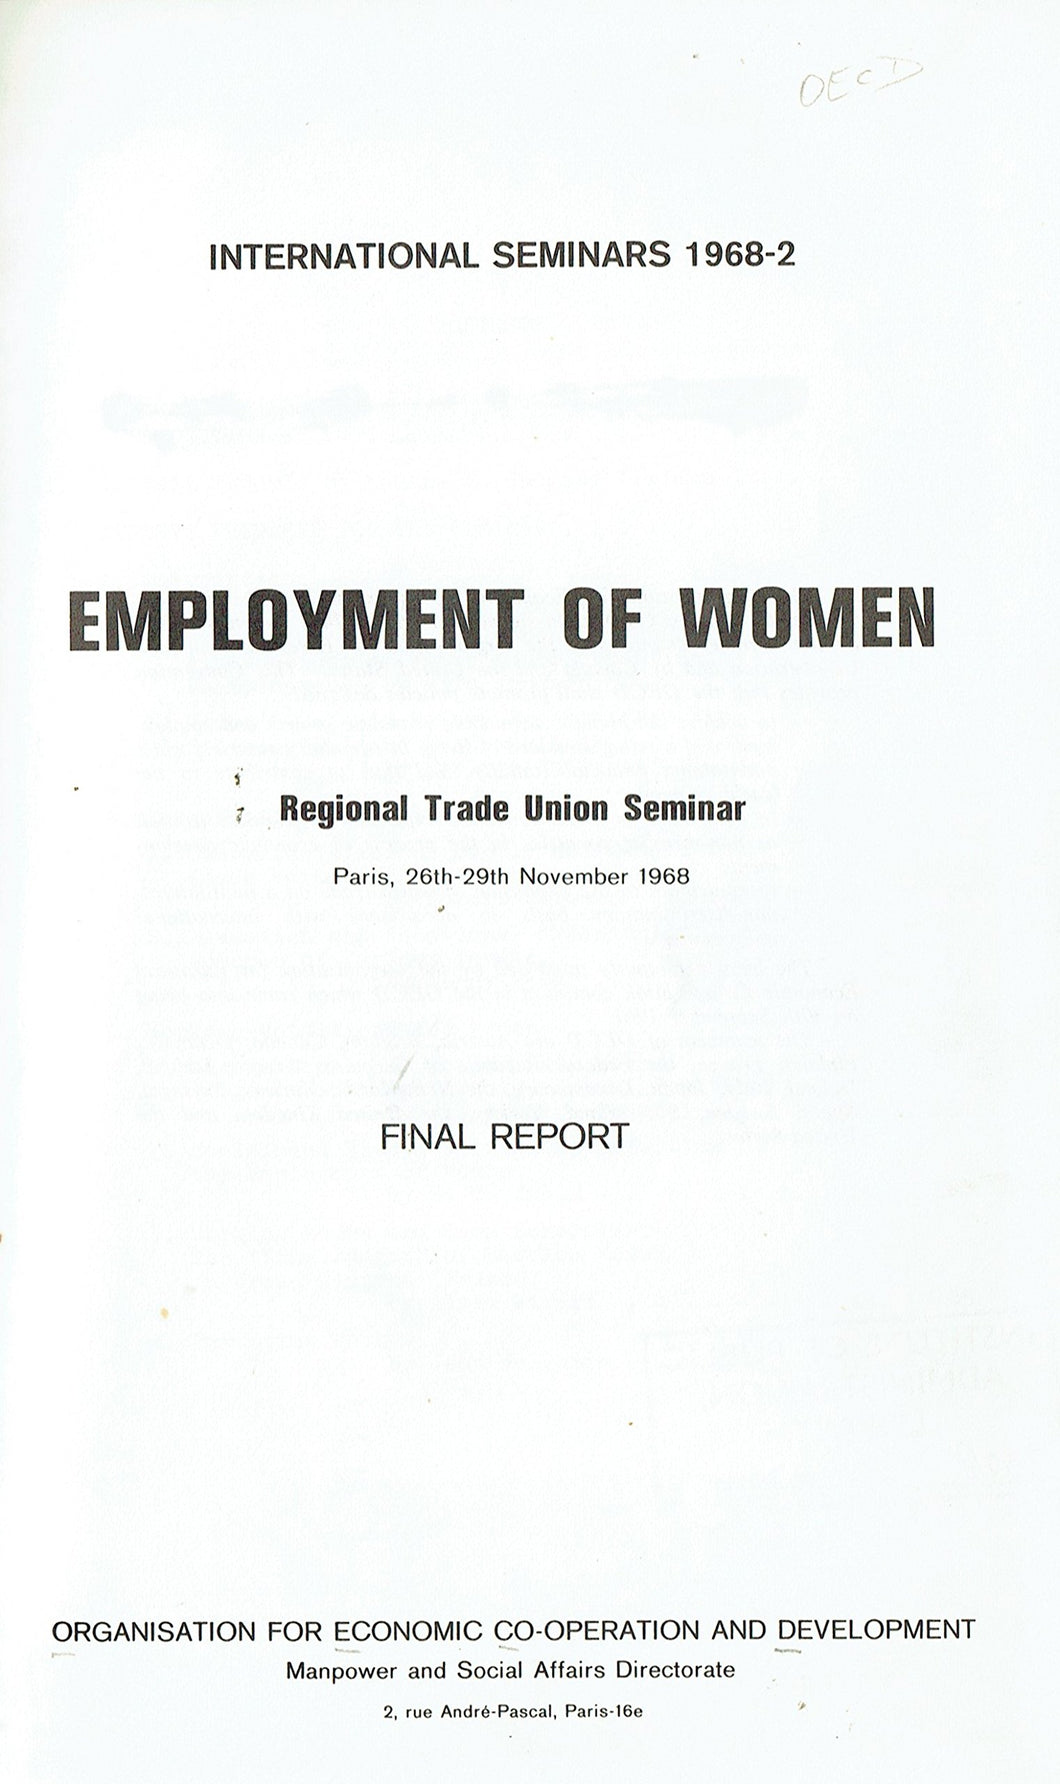 Employment of Women: Regional Trade Union Seminar, Paris, 26th-29th November 1968 - Final Report - International Seminars 1968-2